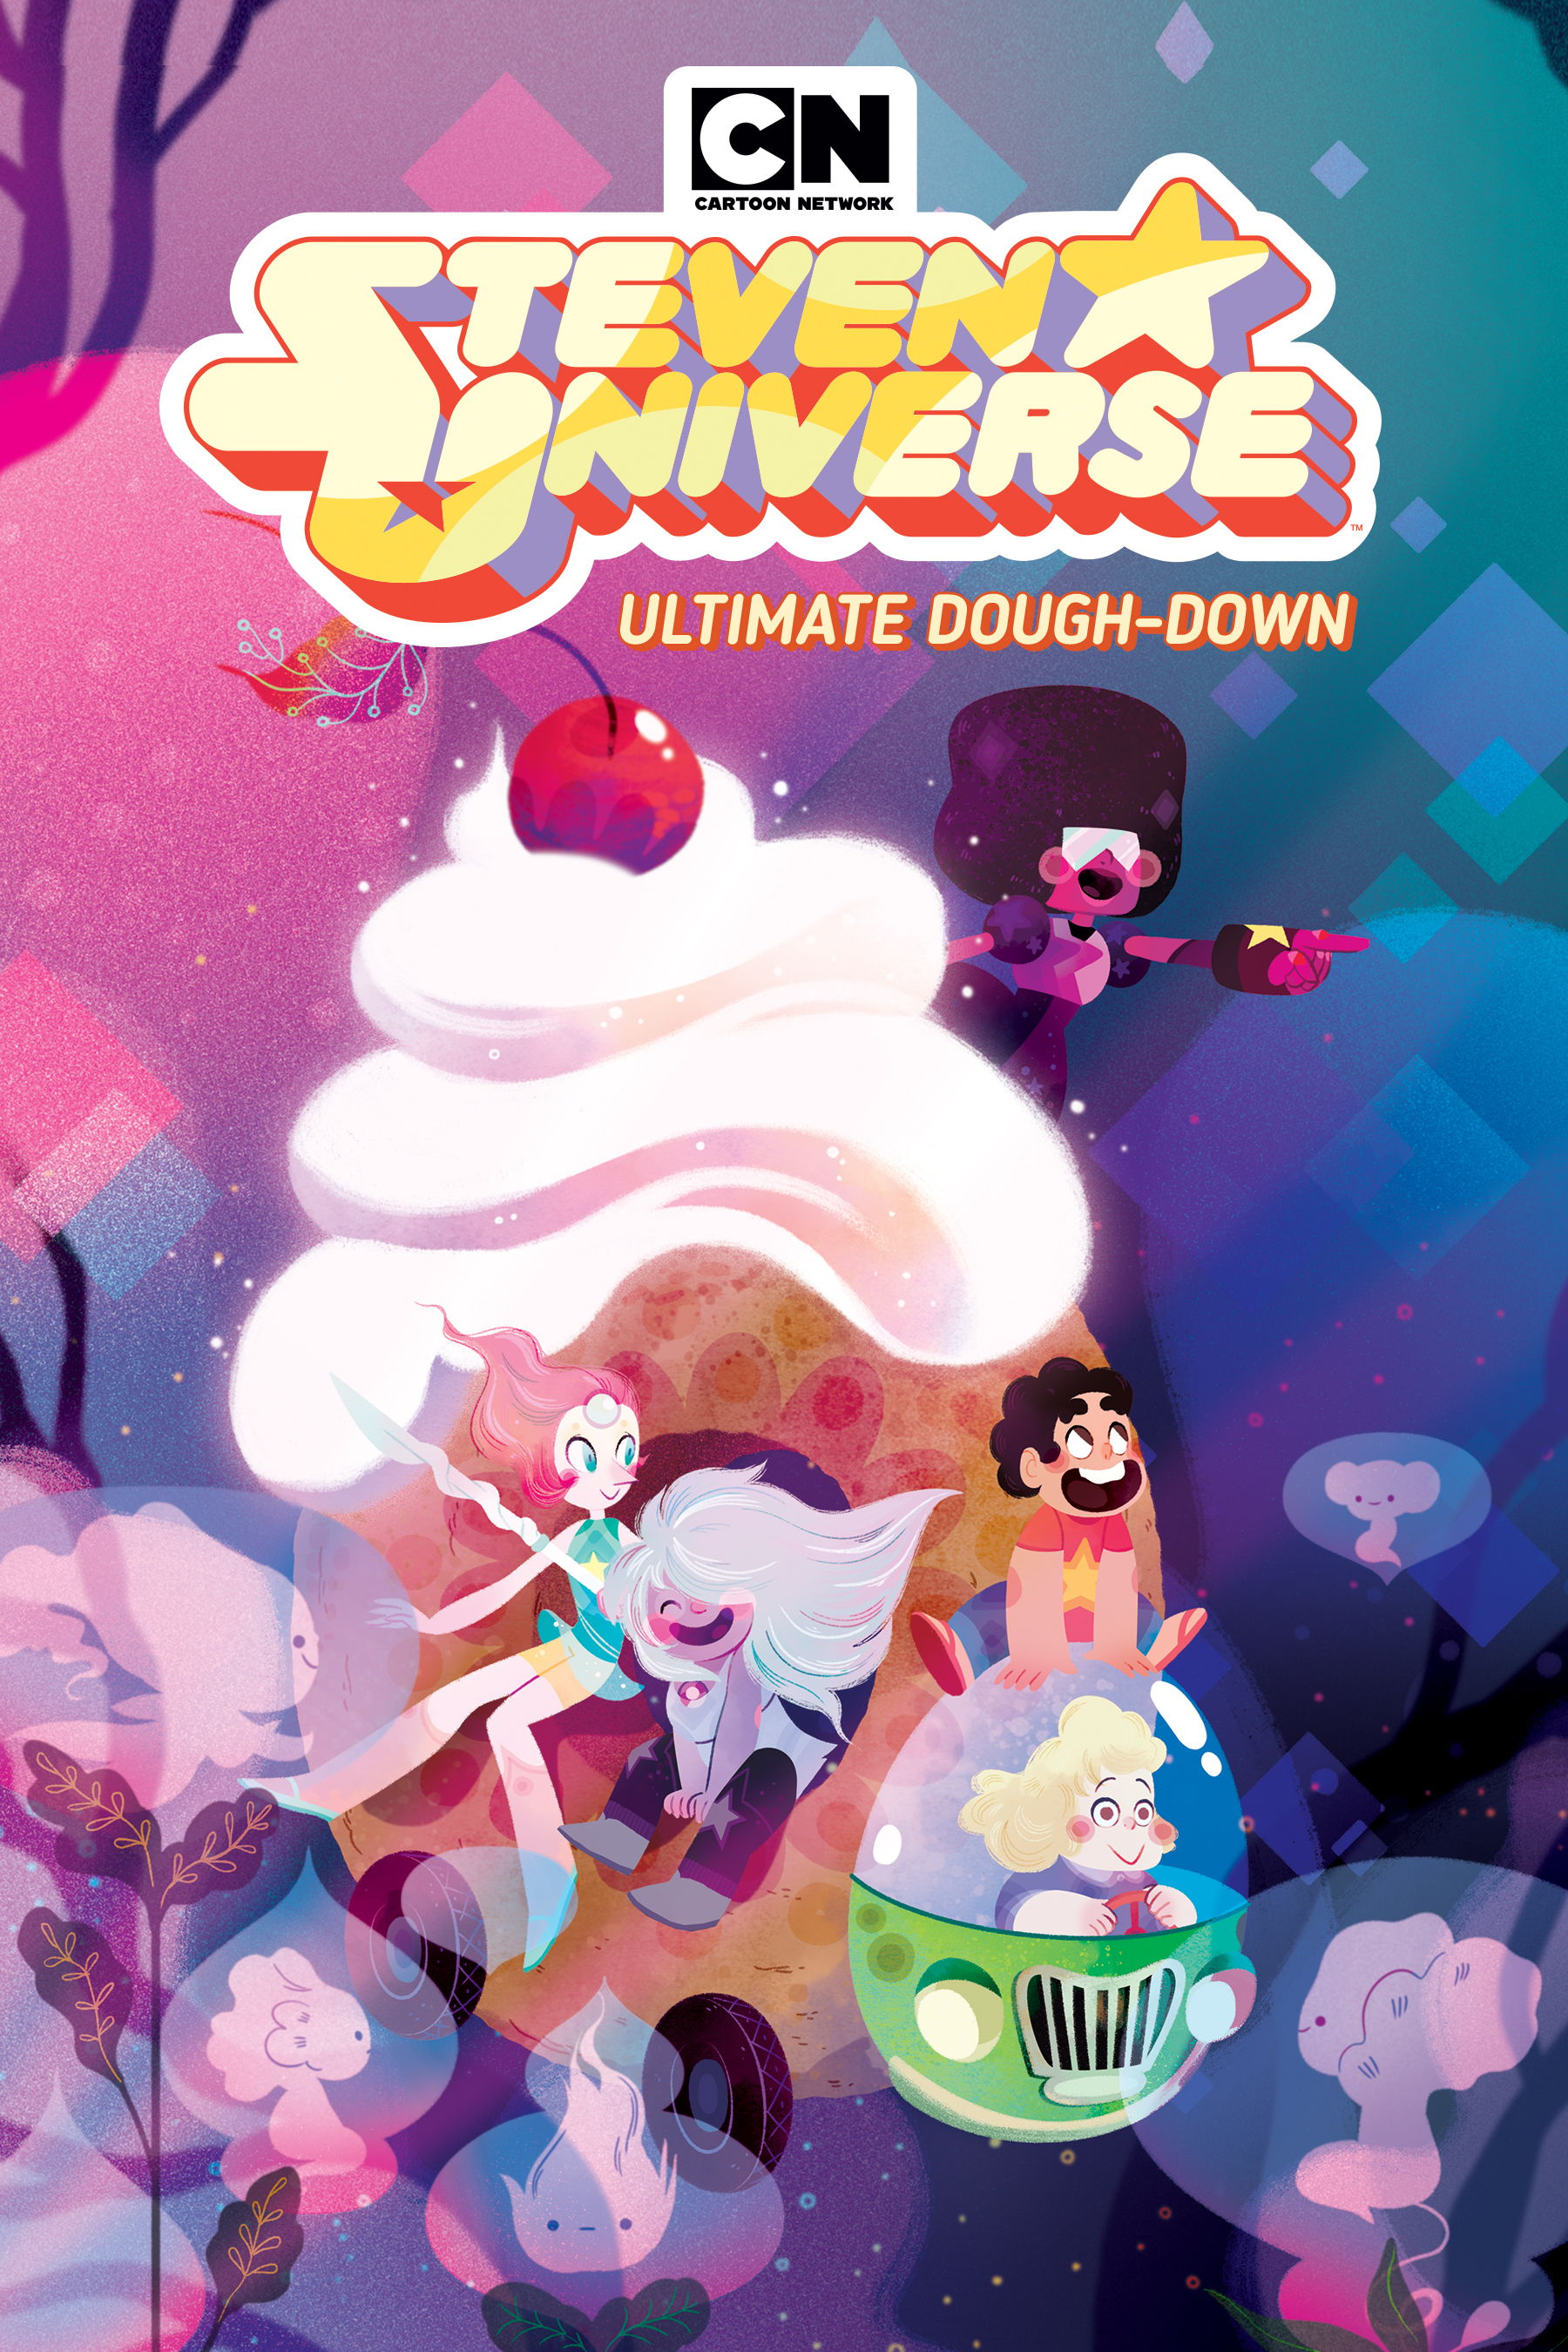 Steven Universo: Harmony Edição 1, Steven Universo Wiki